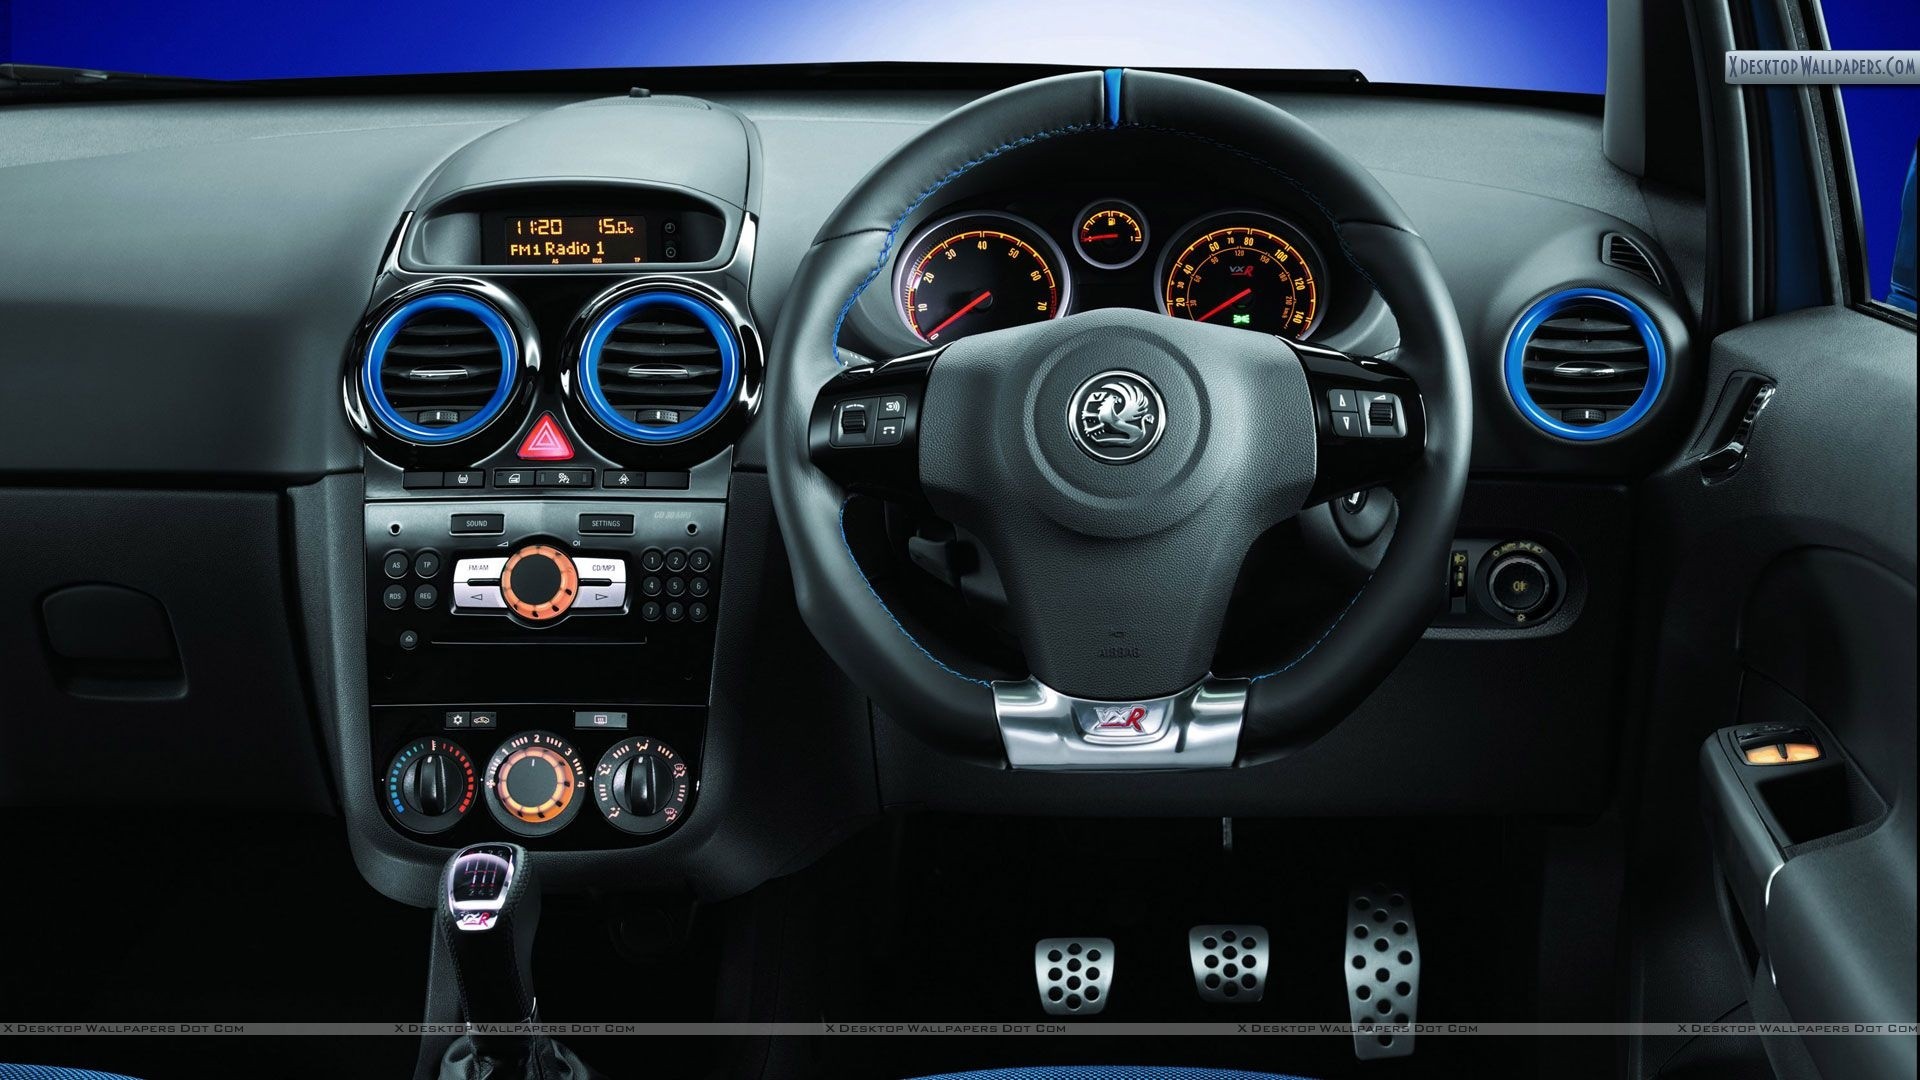 Vauxhall Corsa Vxr HD Wallpaper Background Image